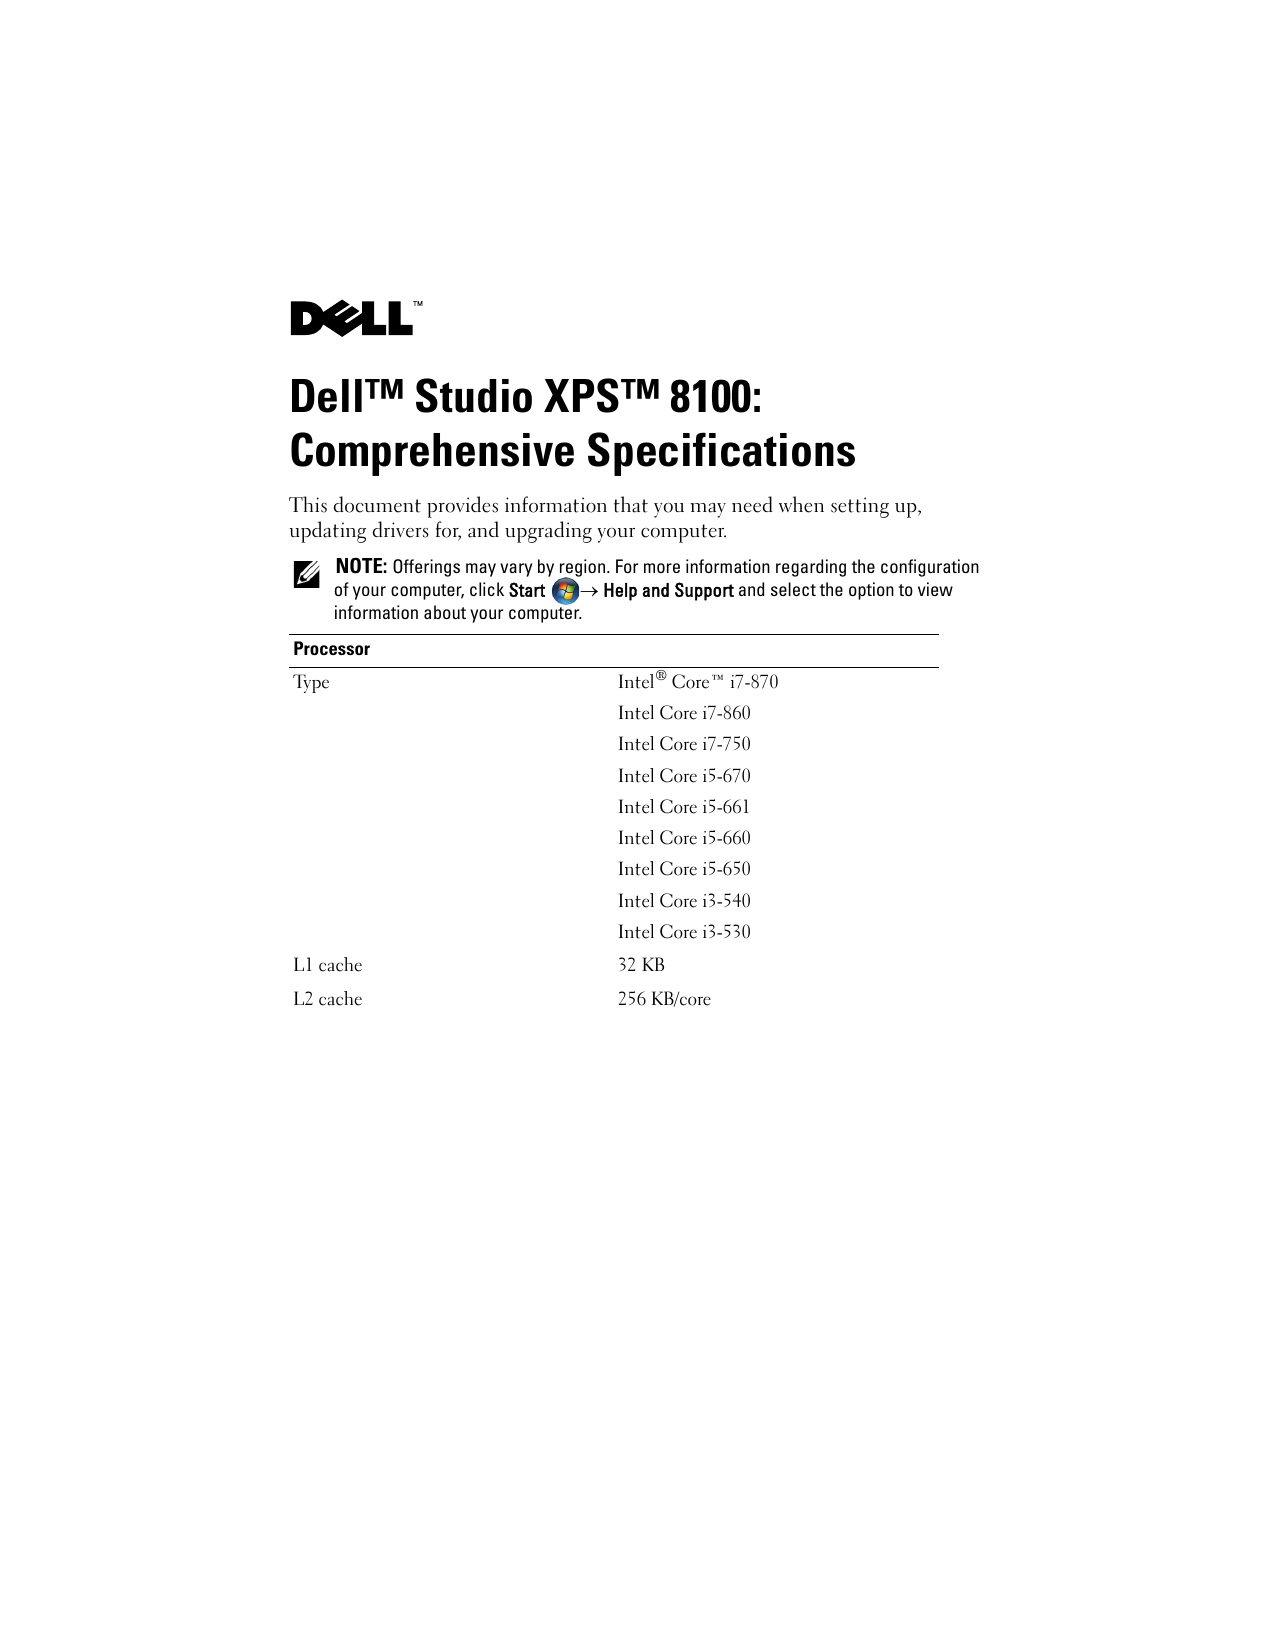 STUDIO XPS D03M001 | XPSTM 8100 | User manual | Dell Studio XPS 8100  Comprehensive Specificationd | Manualzz